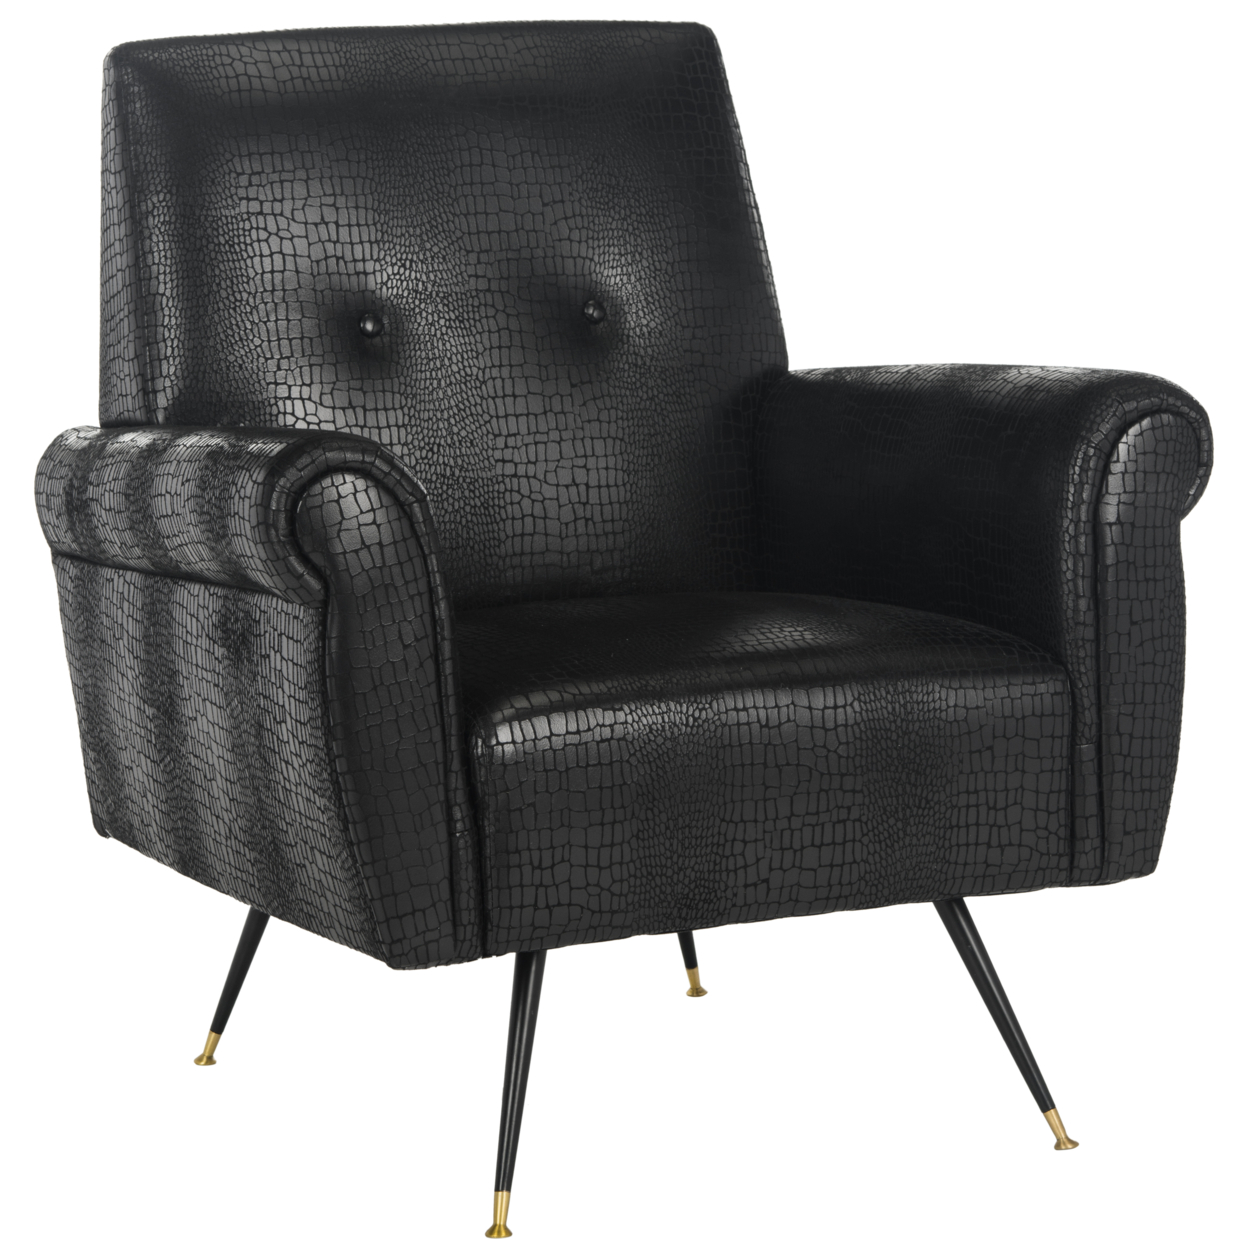 SAFAVIEH Mira Retro Mid-Century Faux Leather Accent Chair Black